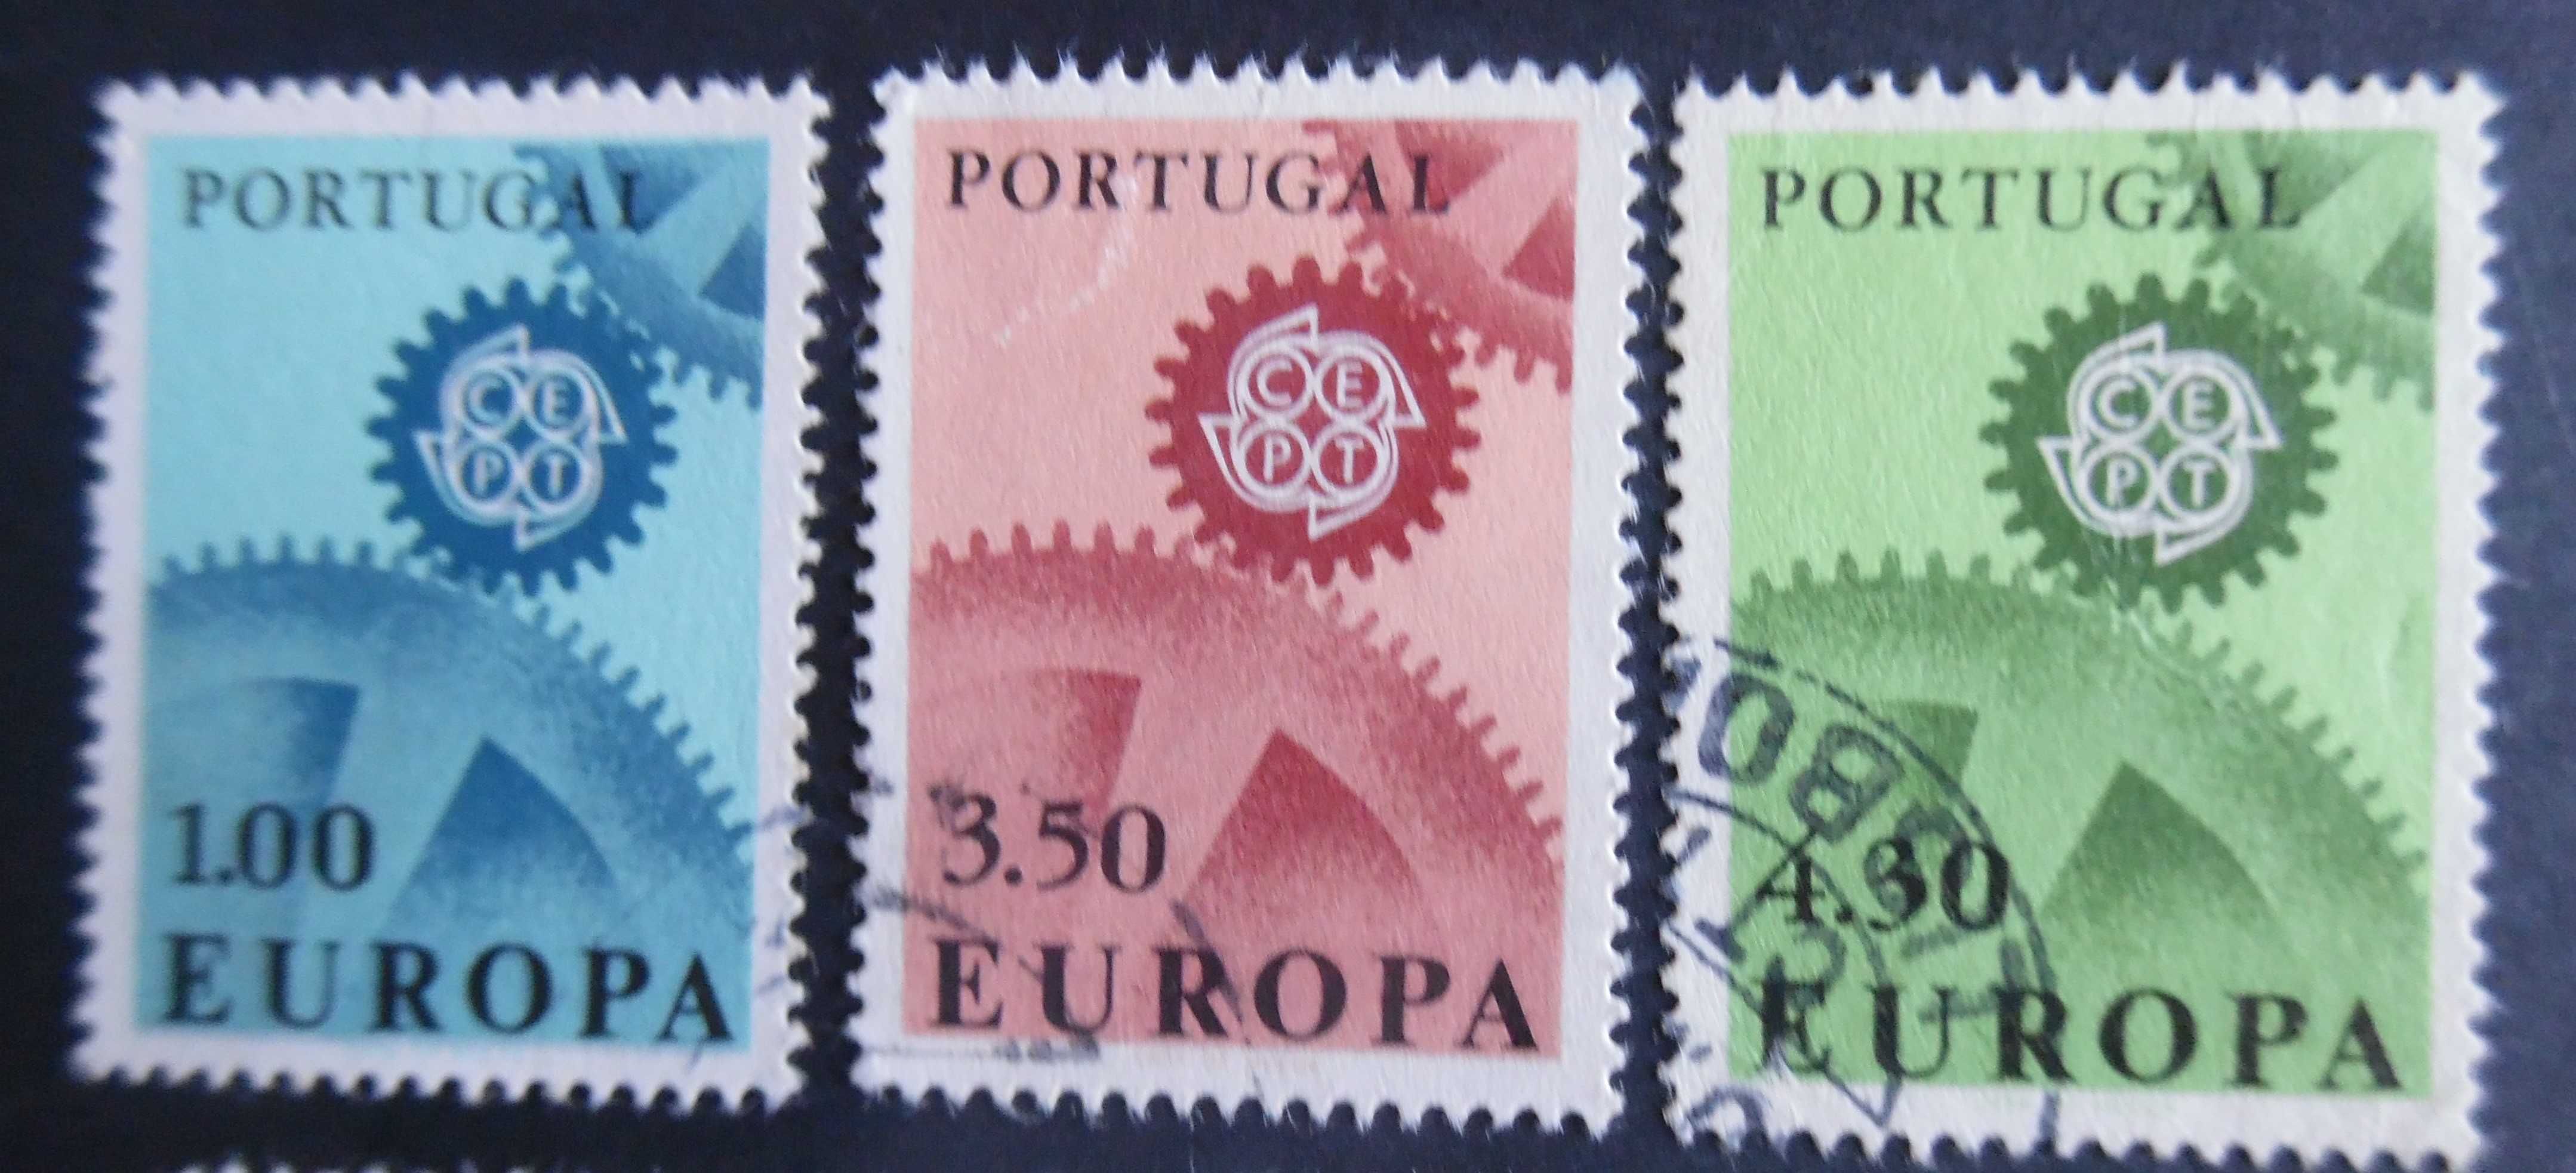 Selos Portugal 1967-Europa CEPT completos usados